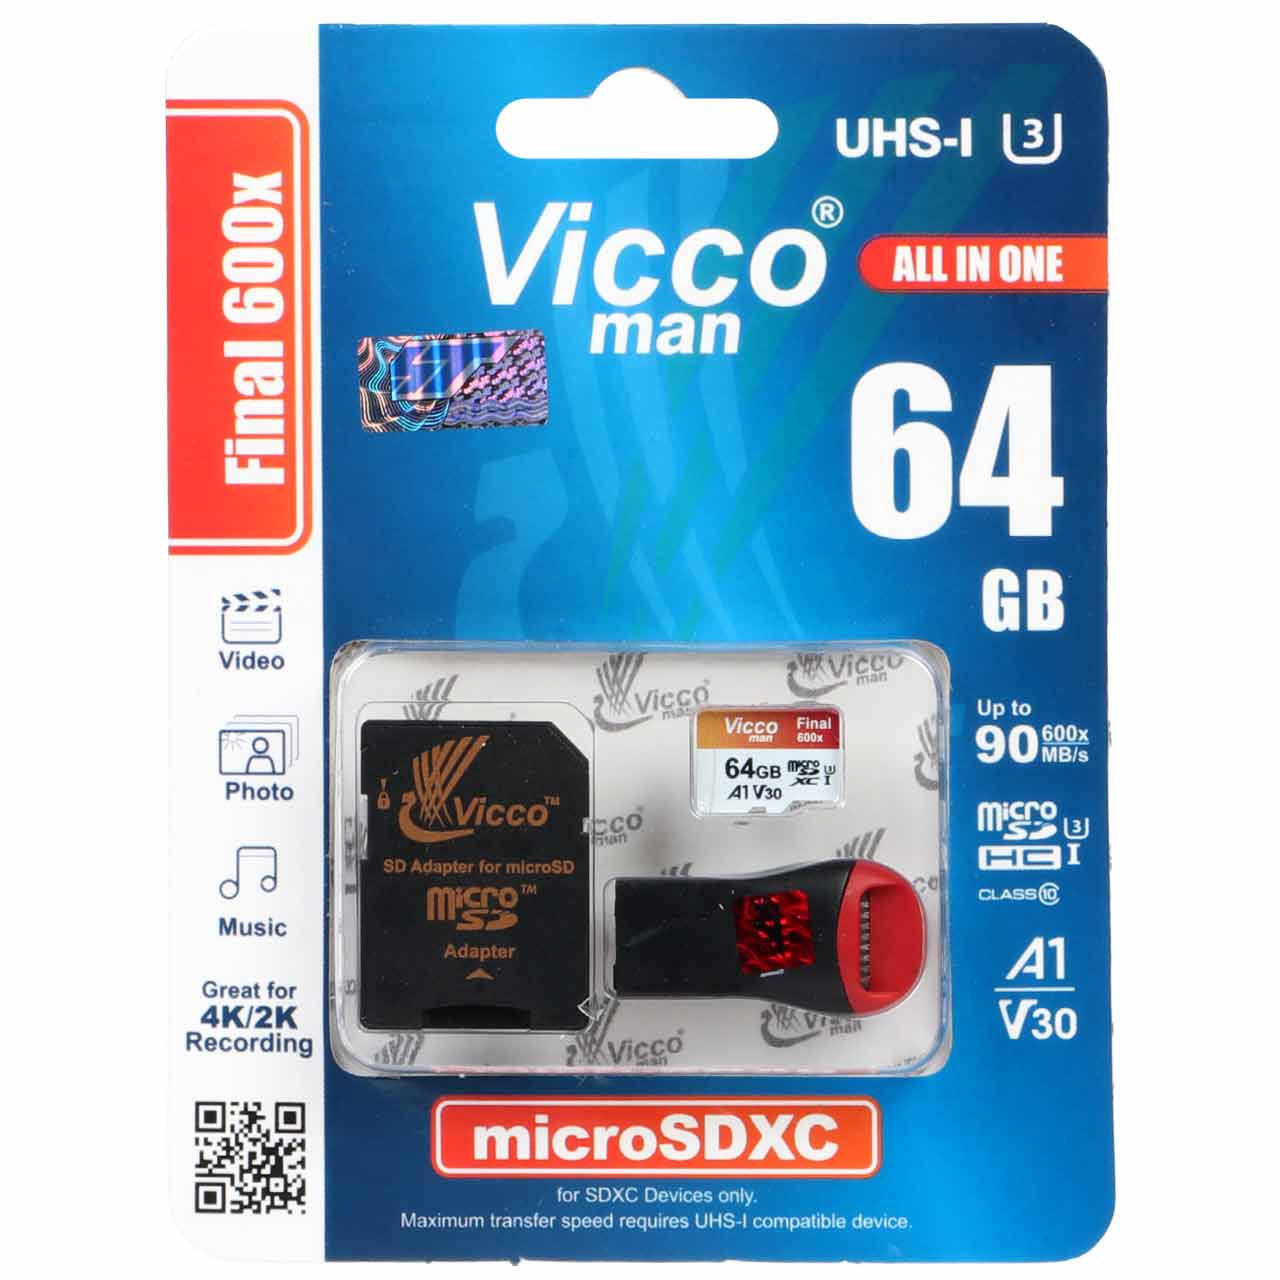 ViccoMan microSDXC & adaptor Final 600X (All in one) V30 UHS-I U3-64GB